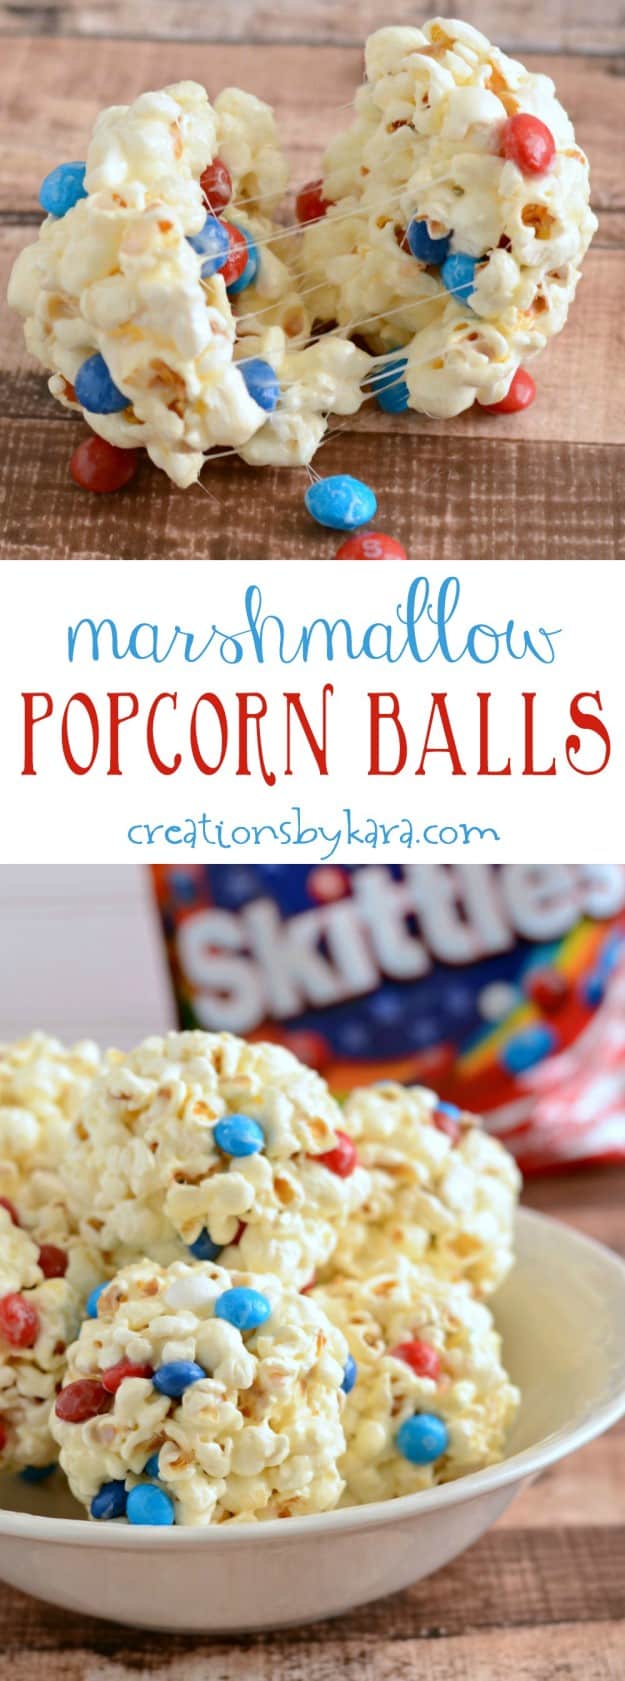 marshmallow popcorn balls recipe collage